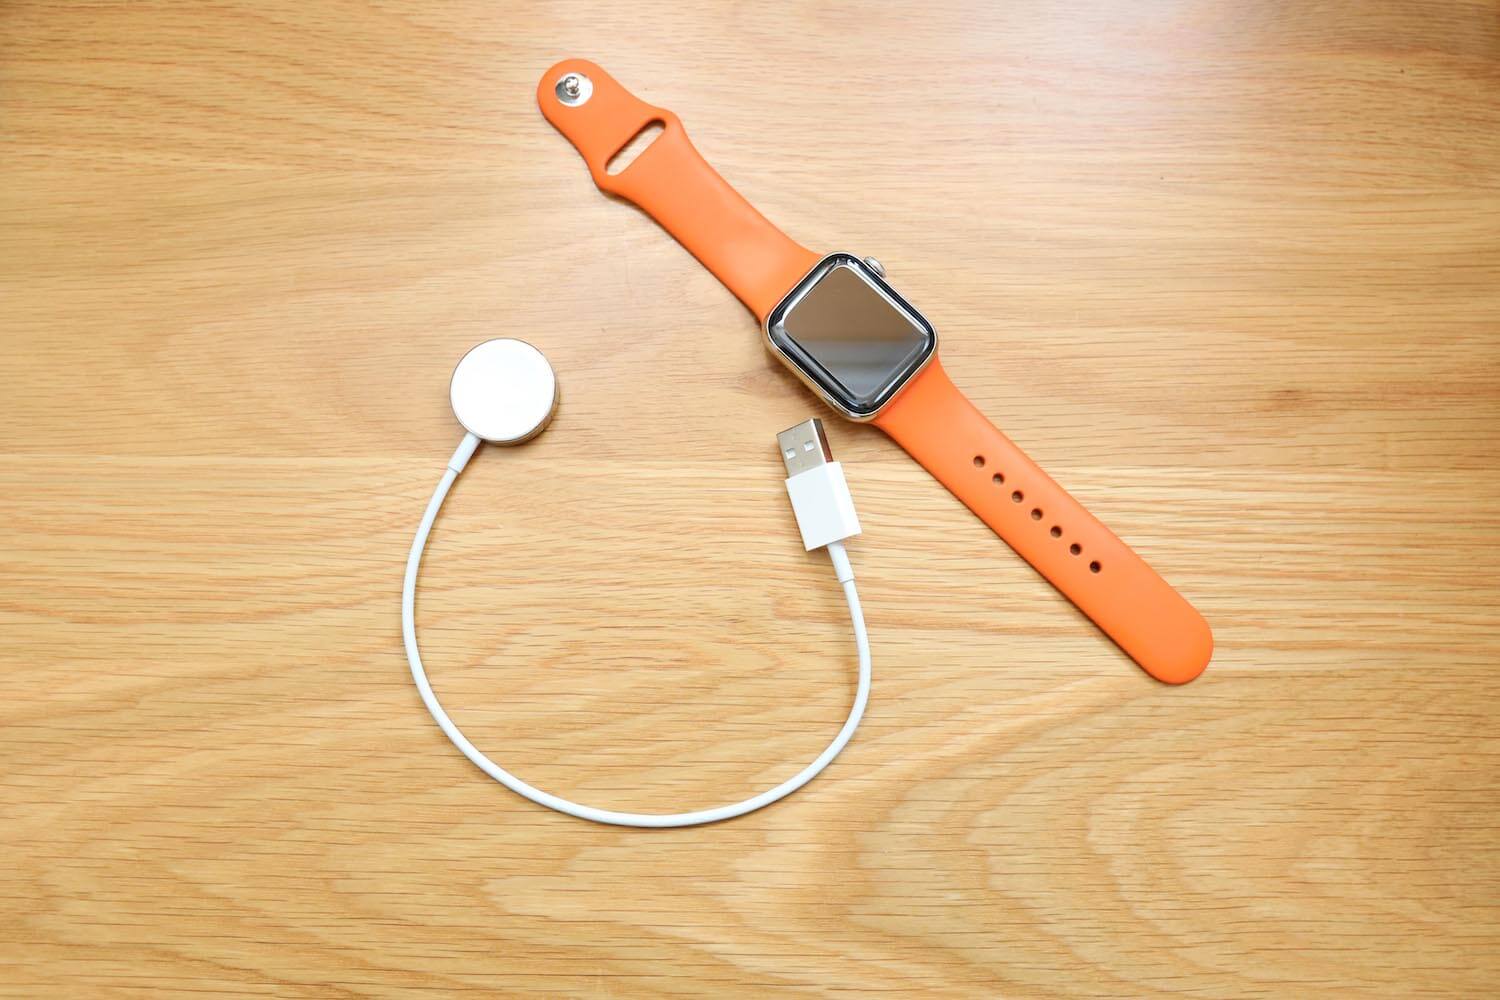 Apple Watch 充電器 2way(ライトニング、USB-C) f2k